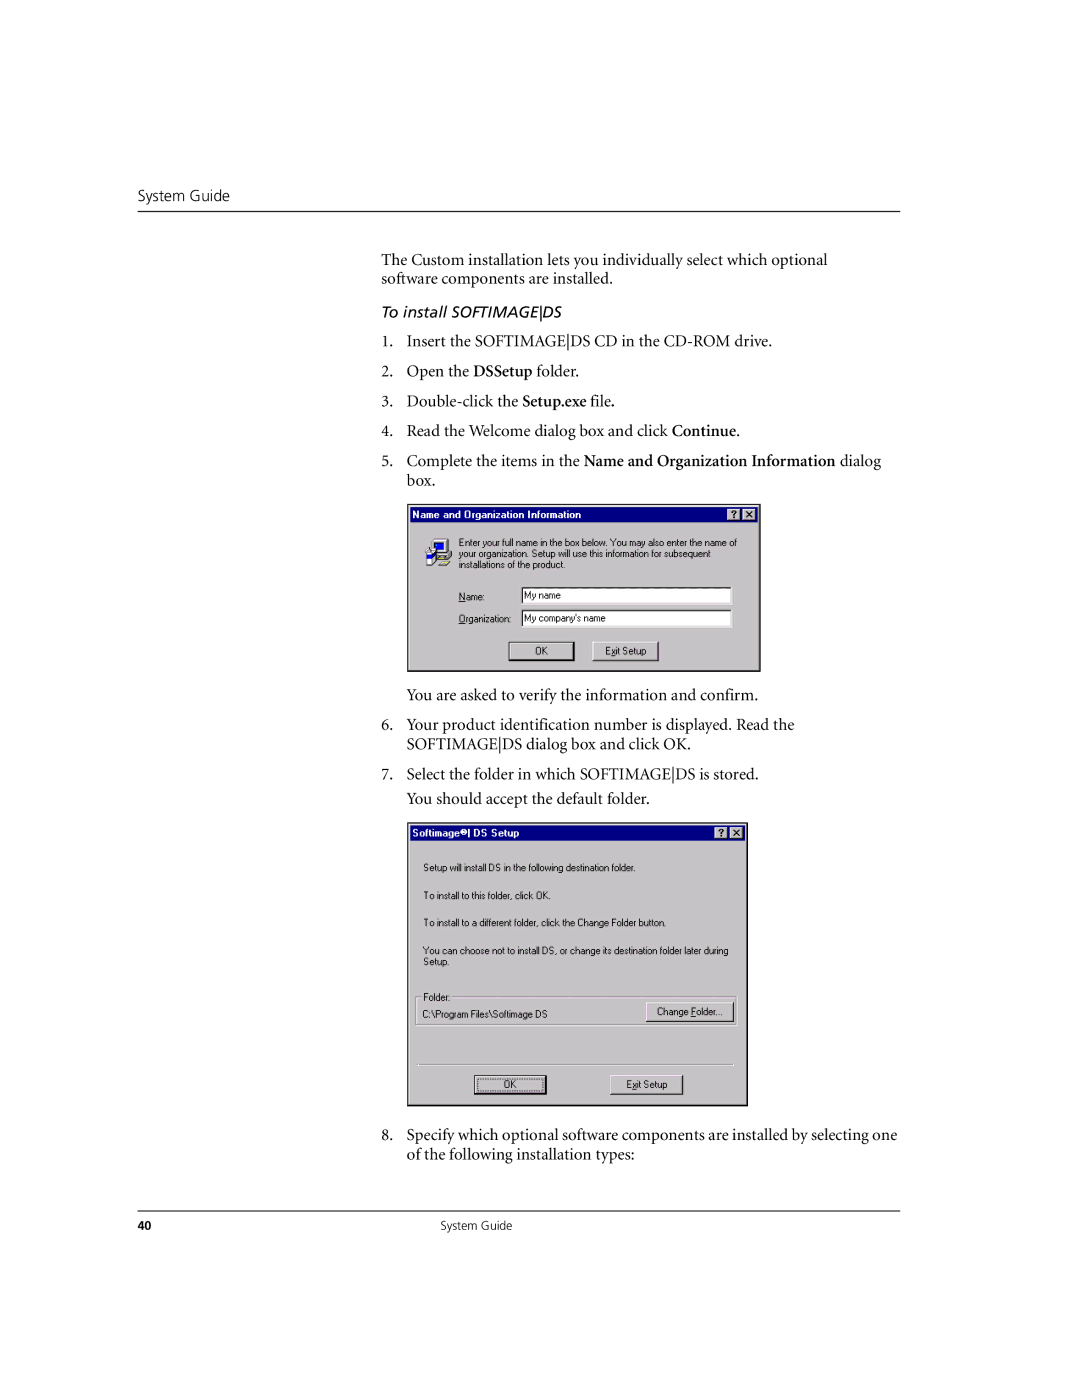 Microsoft DHA025600 manual To install Softimageds 